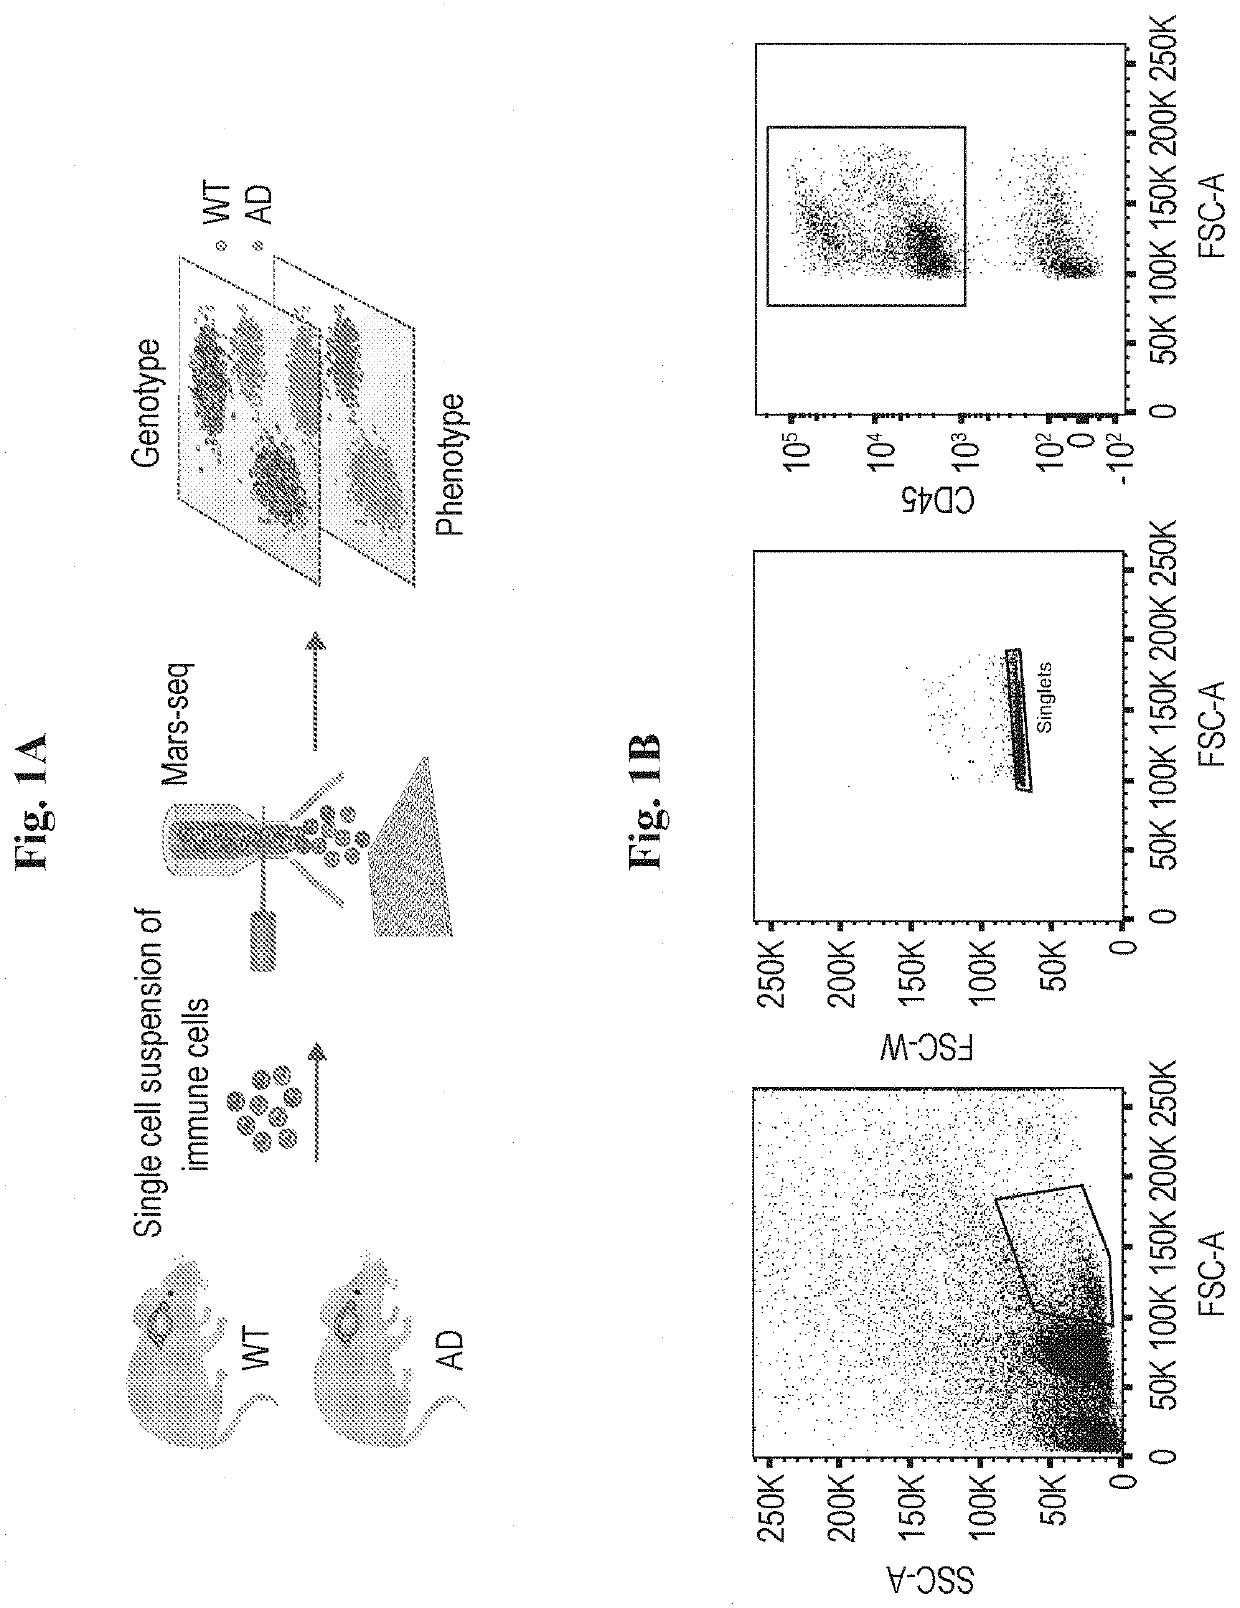 Methods of treating neurodegenerative diseases by inducing disease-associated microglia (DAM) cells